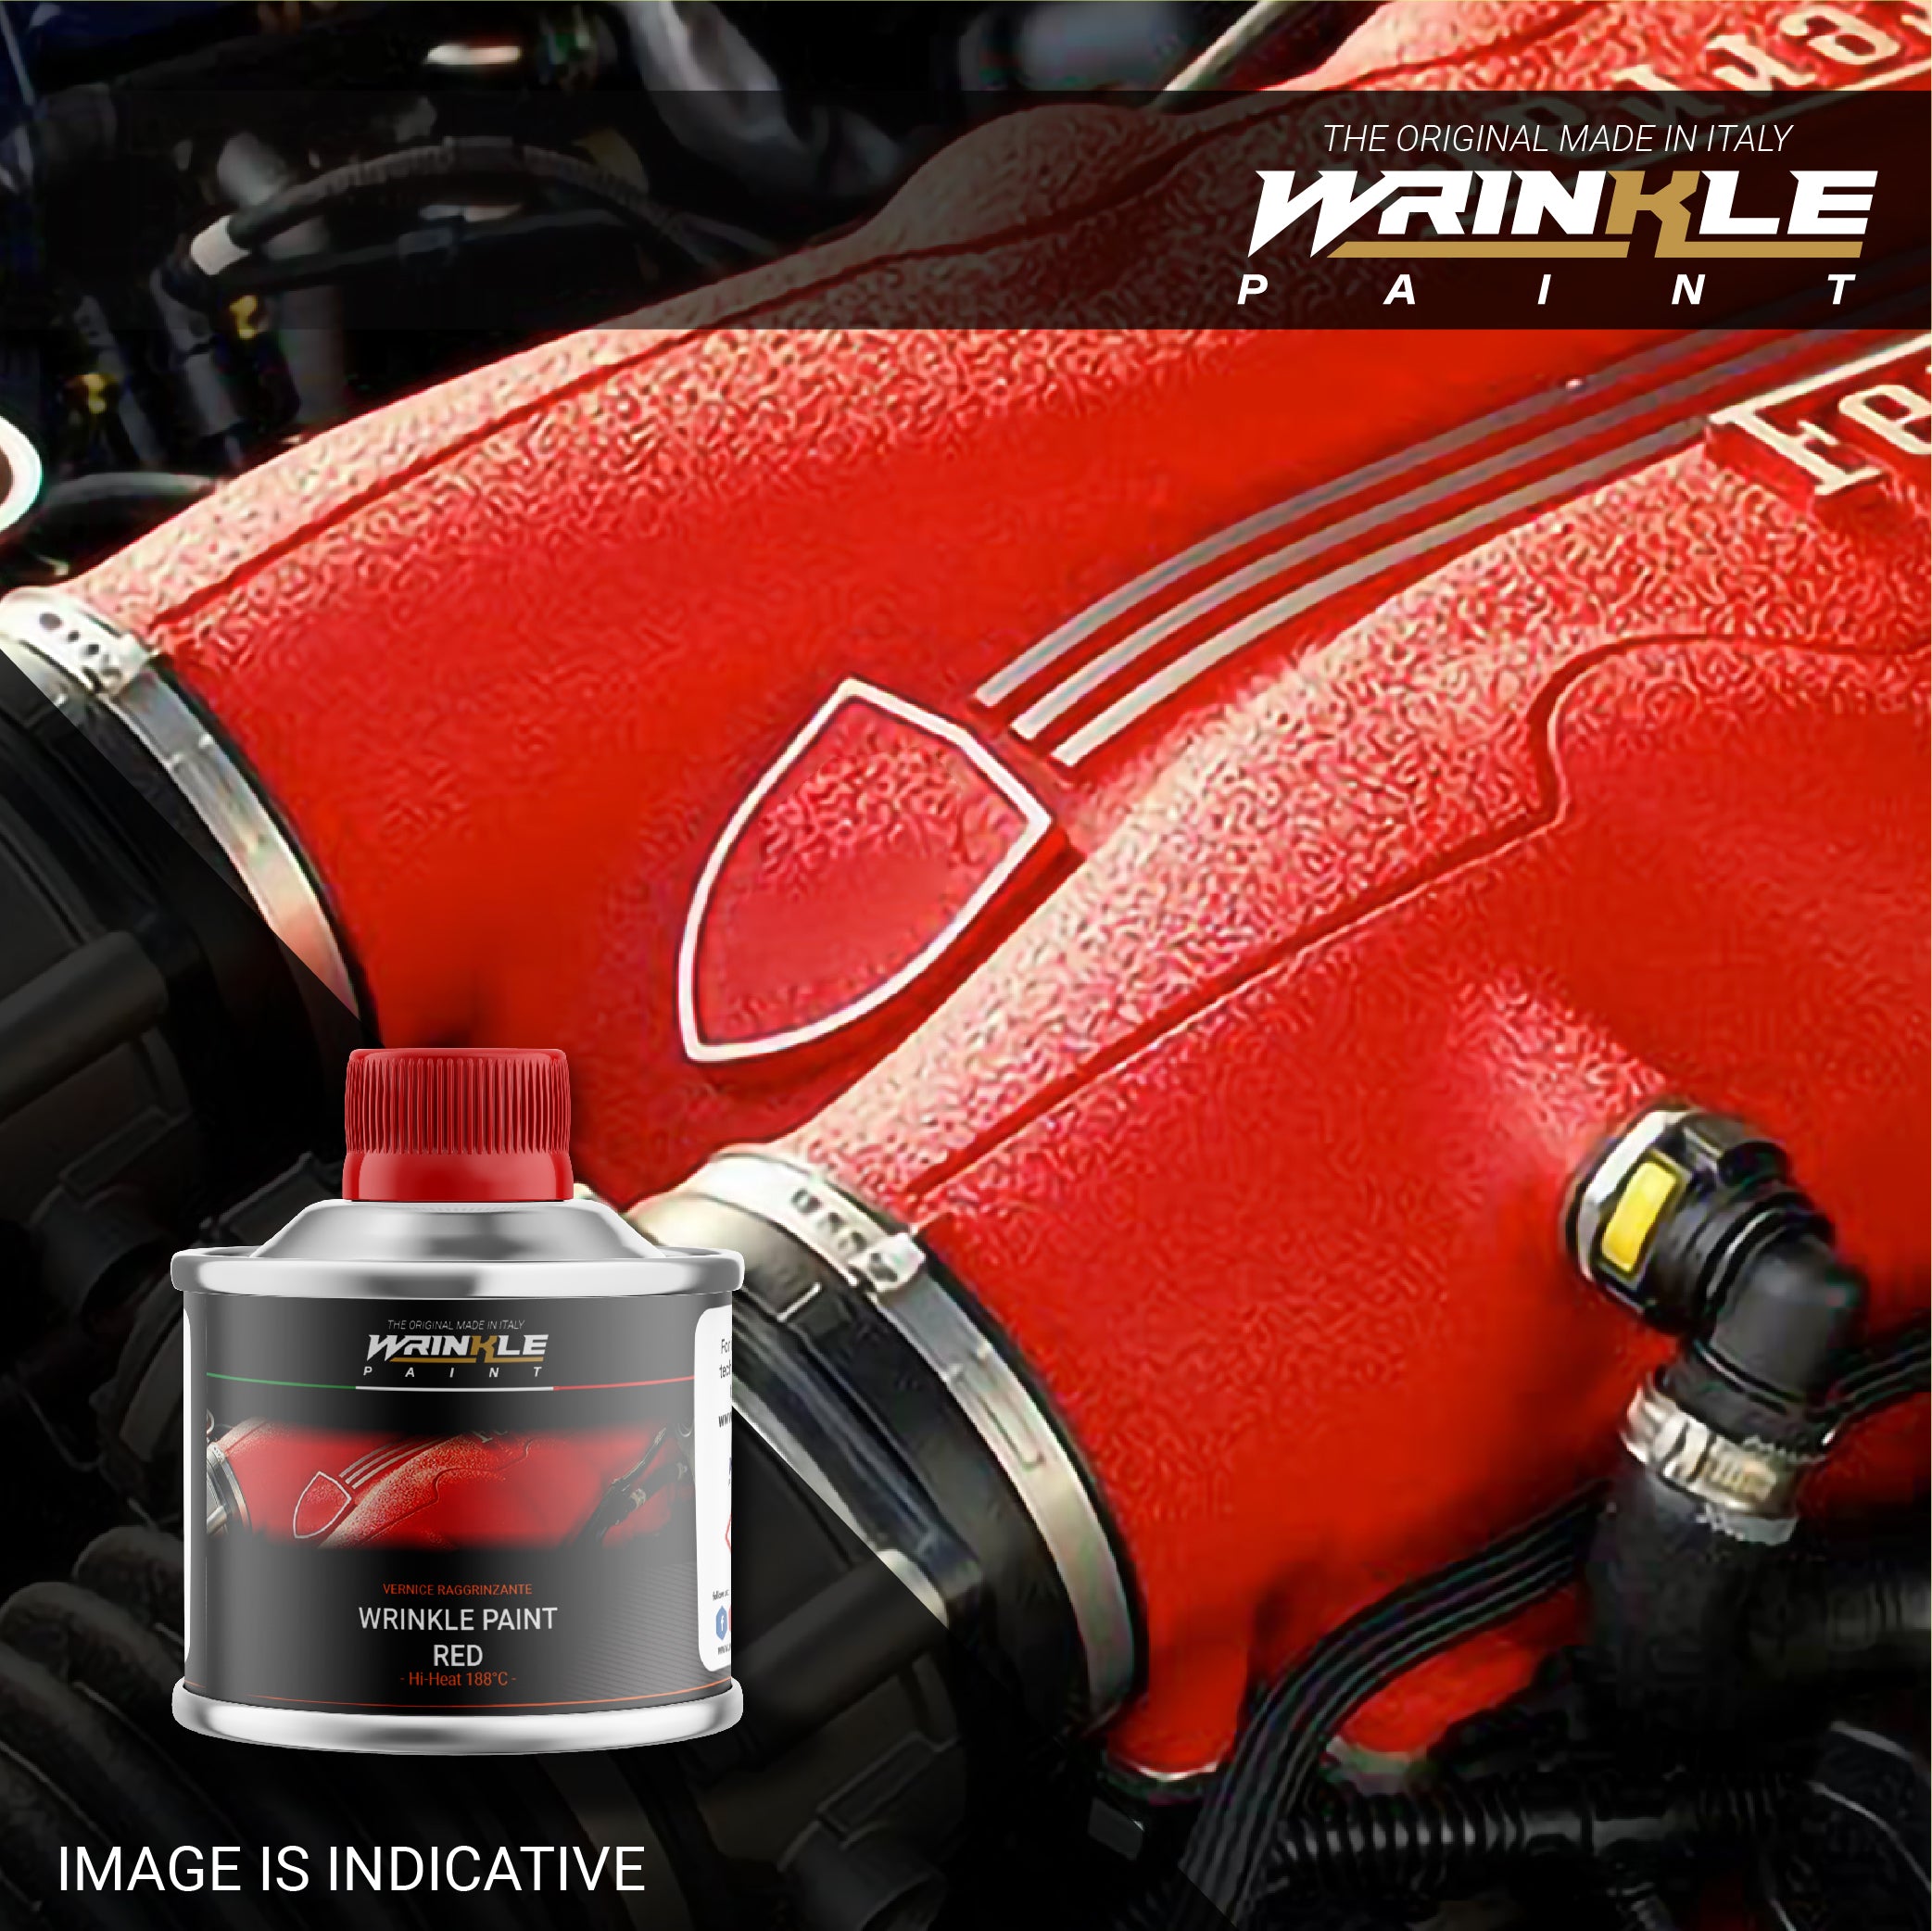 Wrinkle Paint FERRARI RED Engine High Heat - 250 gr